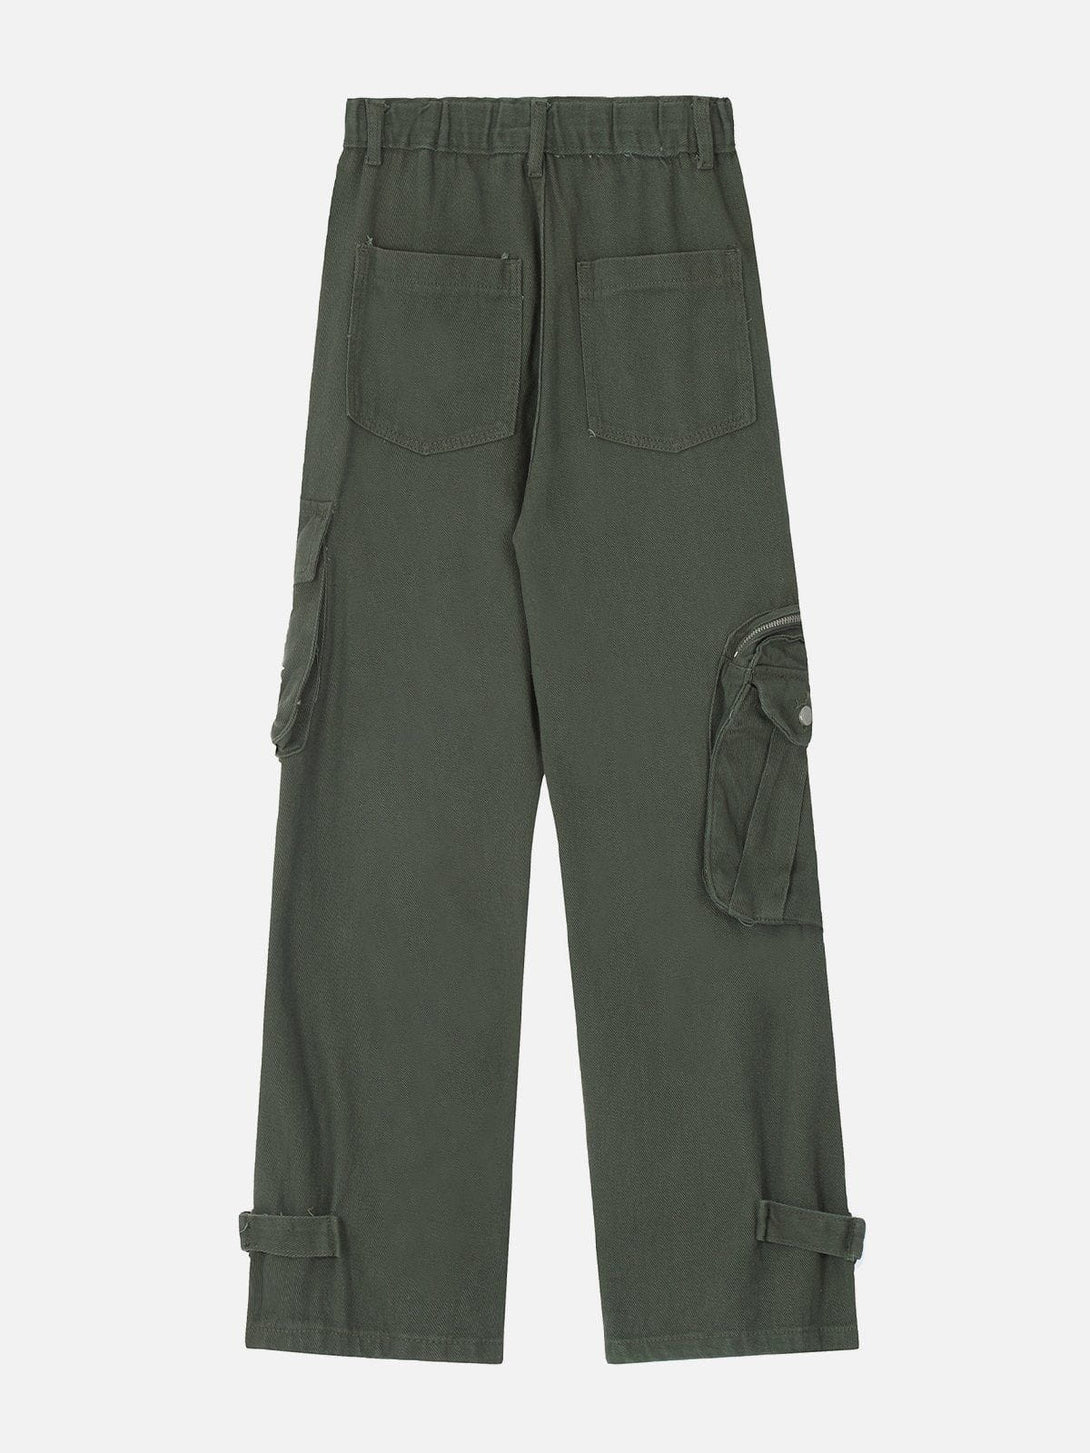 Levefly - Multi-pocket Cargo Pants - Streetwear Fashion - levefly.com